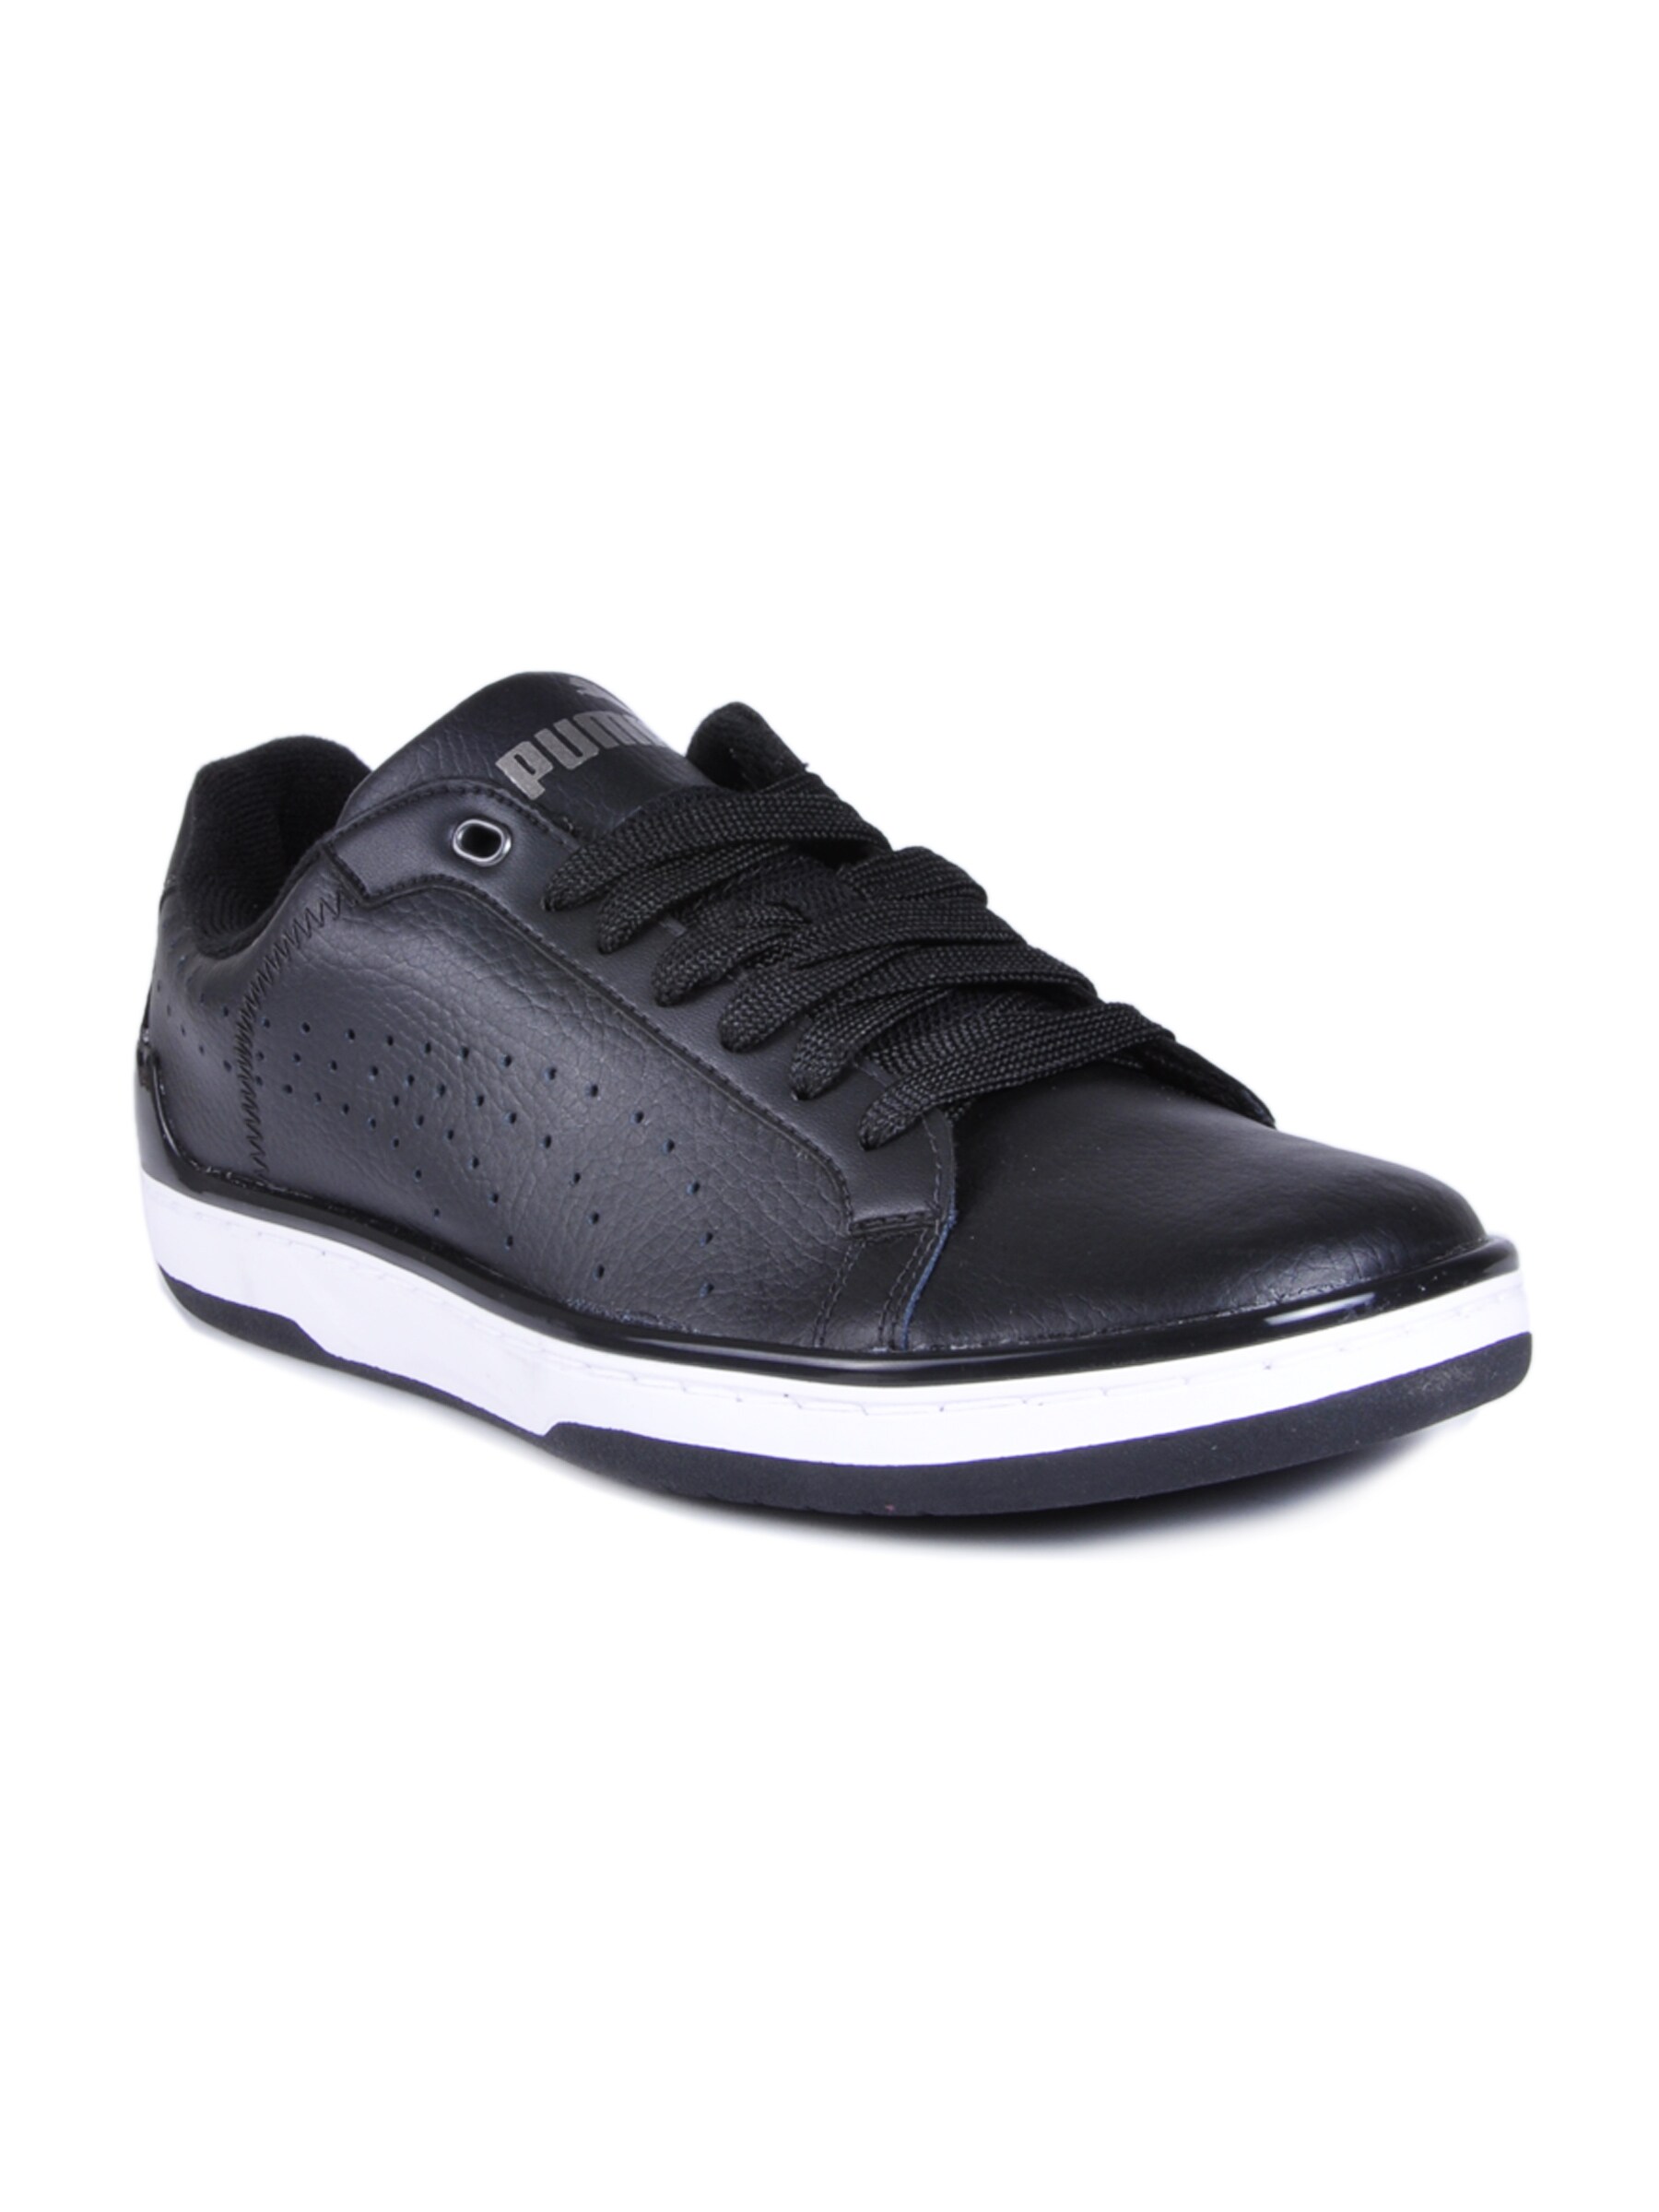 Puma Unisex Evo Black Casual Shoes